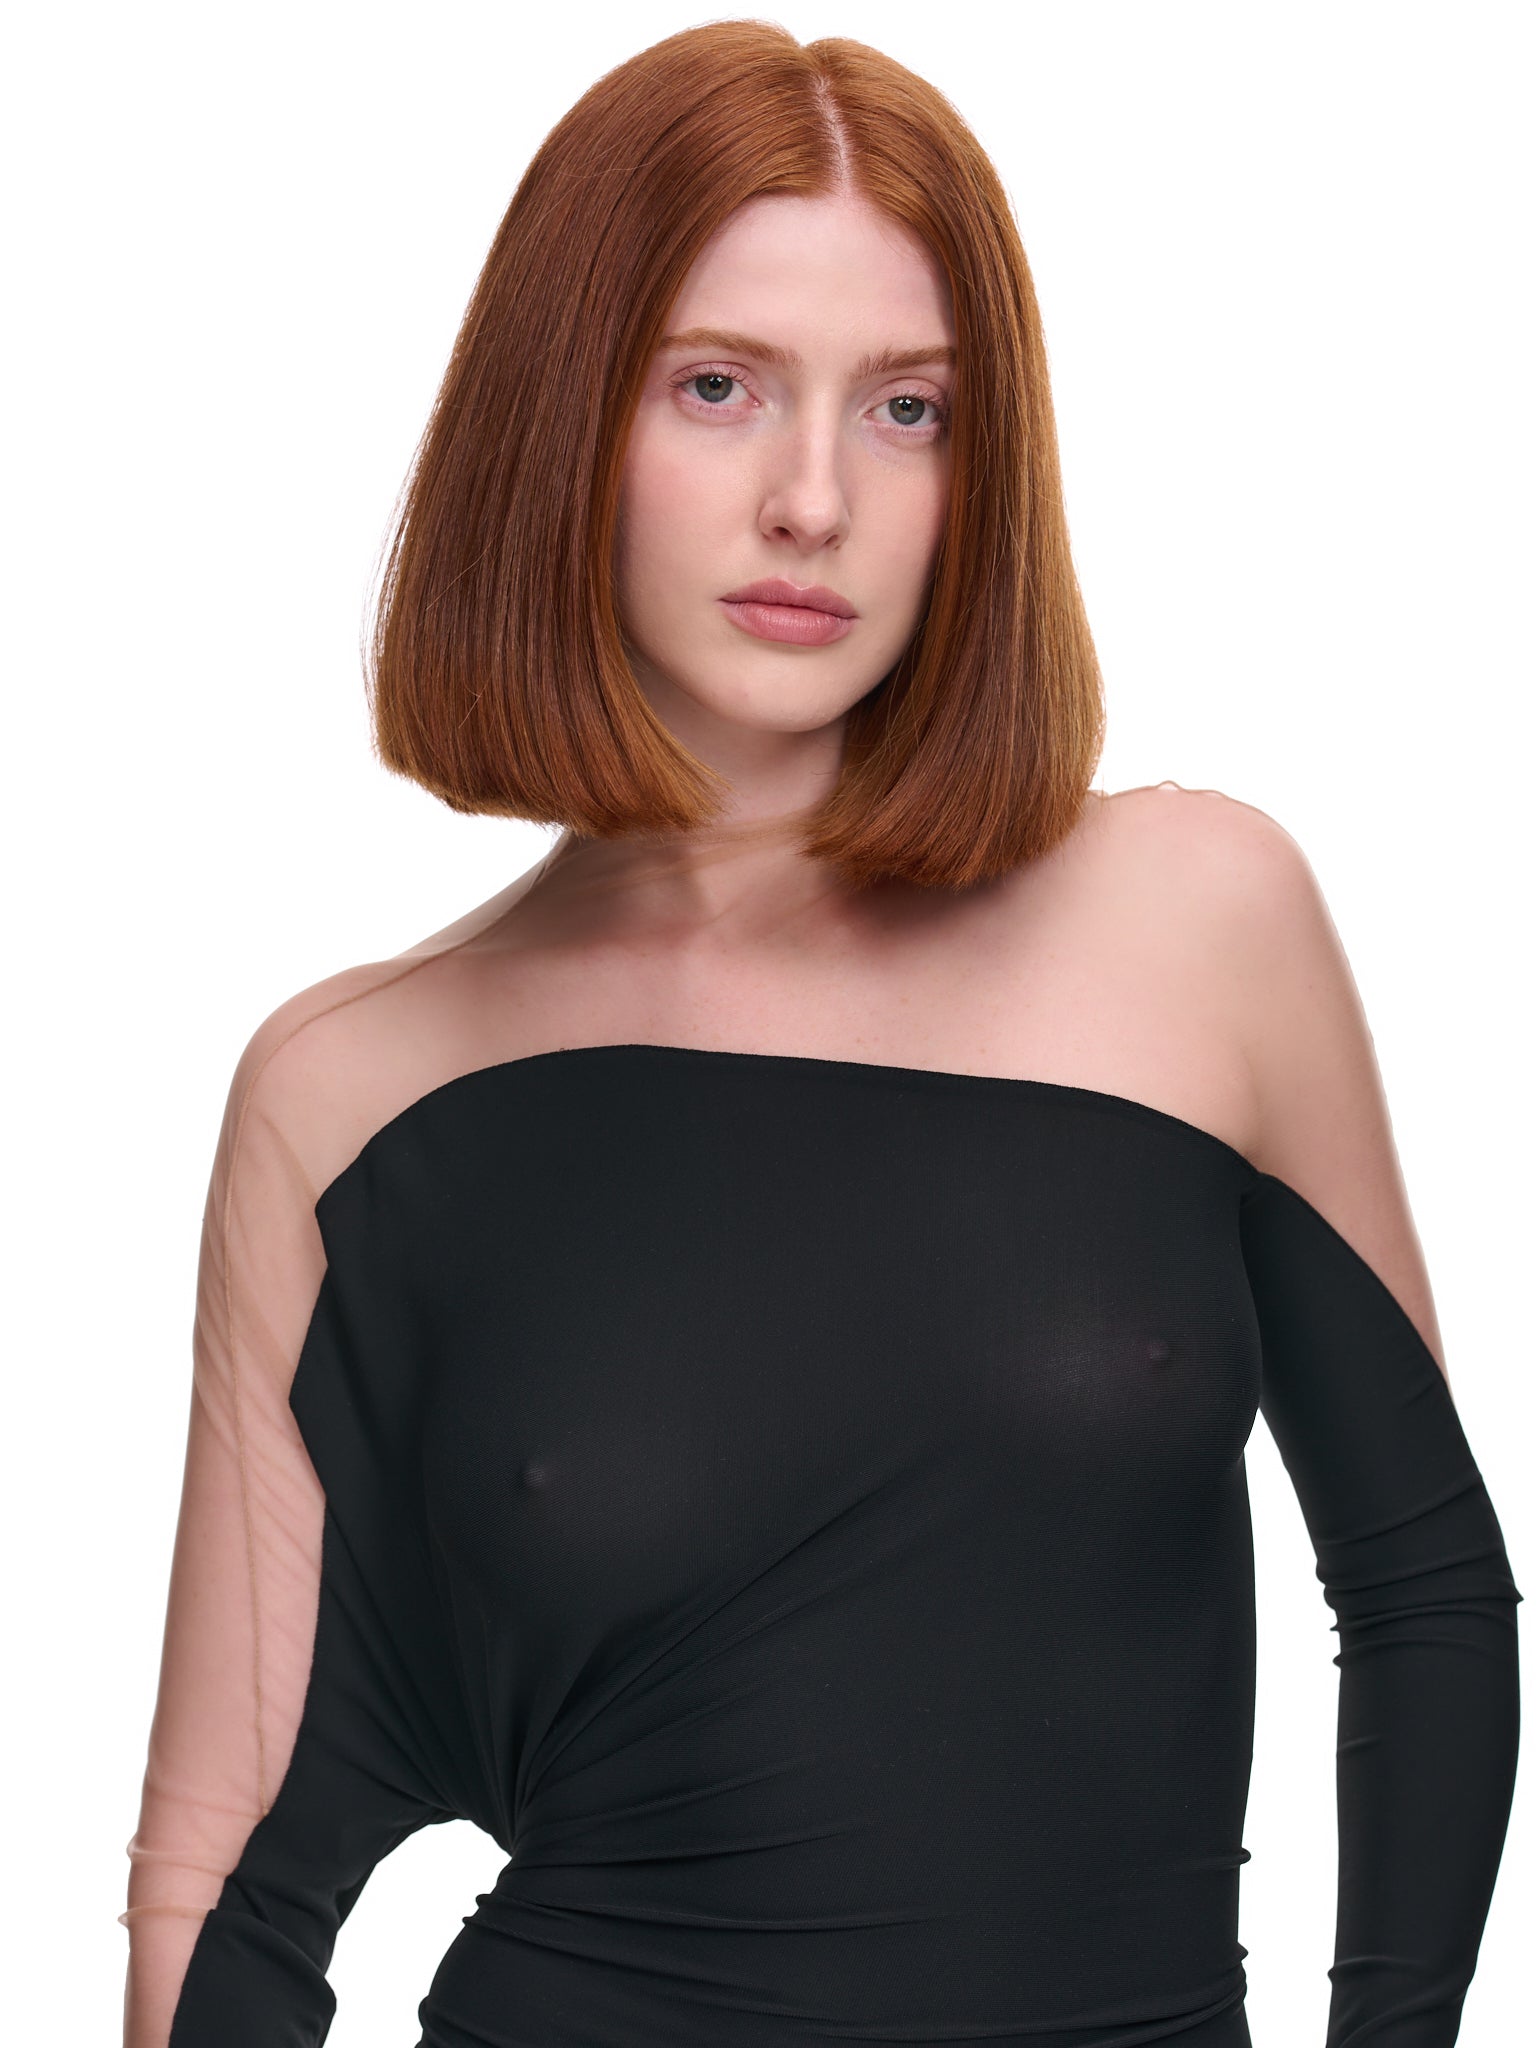 Impossible Neckline Dress (1RO147460A-19991-BLACK-NUDE-01)